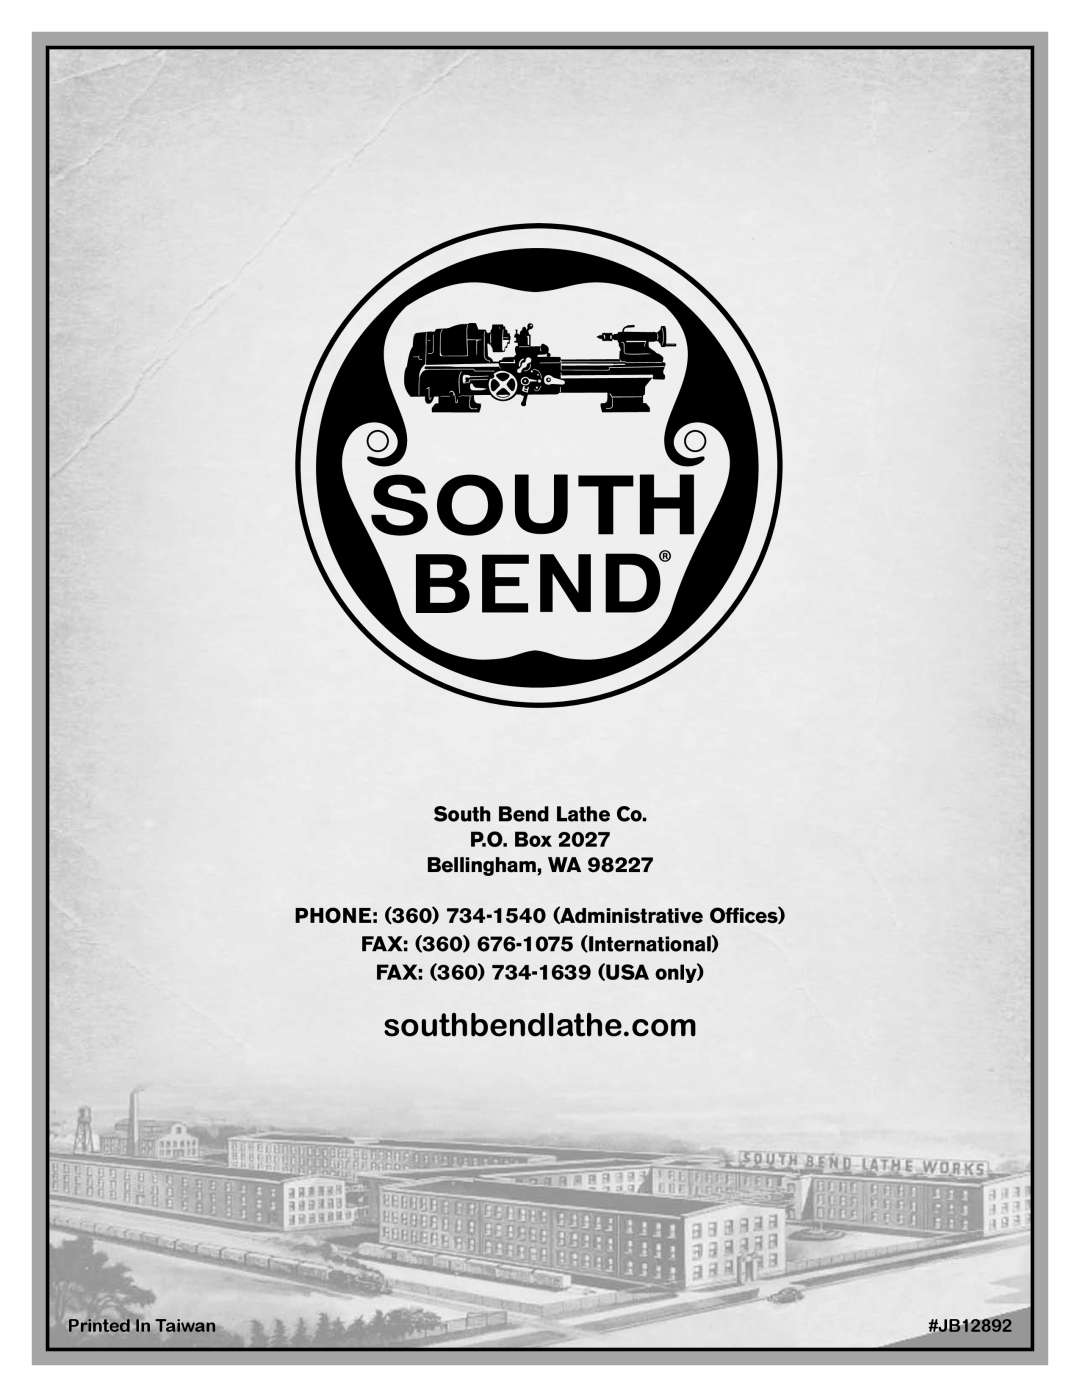 Southbend SB1019 southbendlathe.com, South Bend Lathe Co P.O. Box Bellingham, WA, PHONE 360 734-1540 Administrative Ofﬁces 